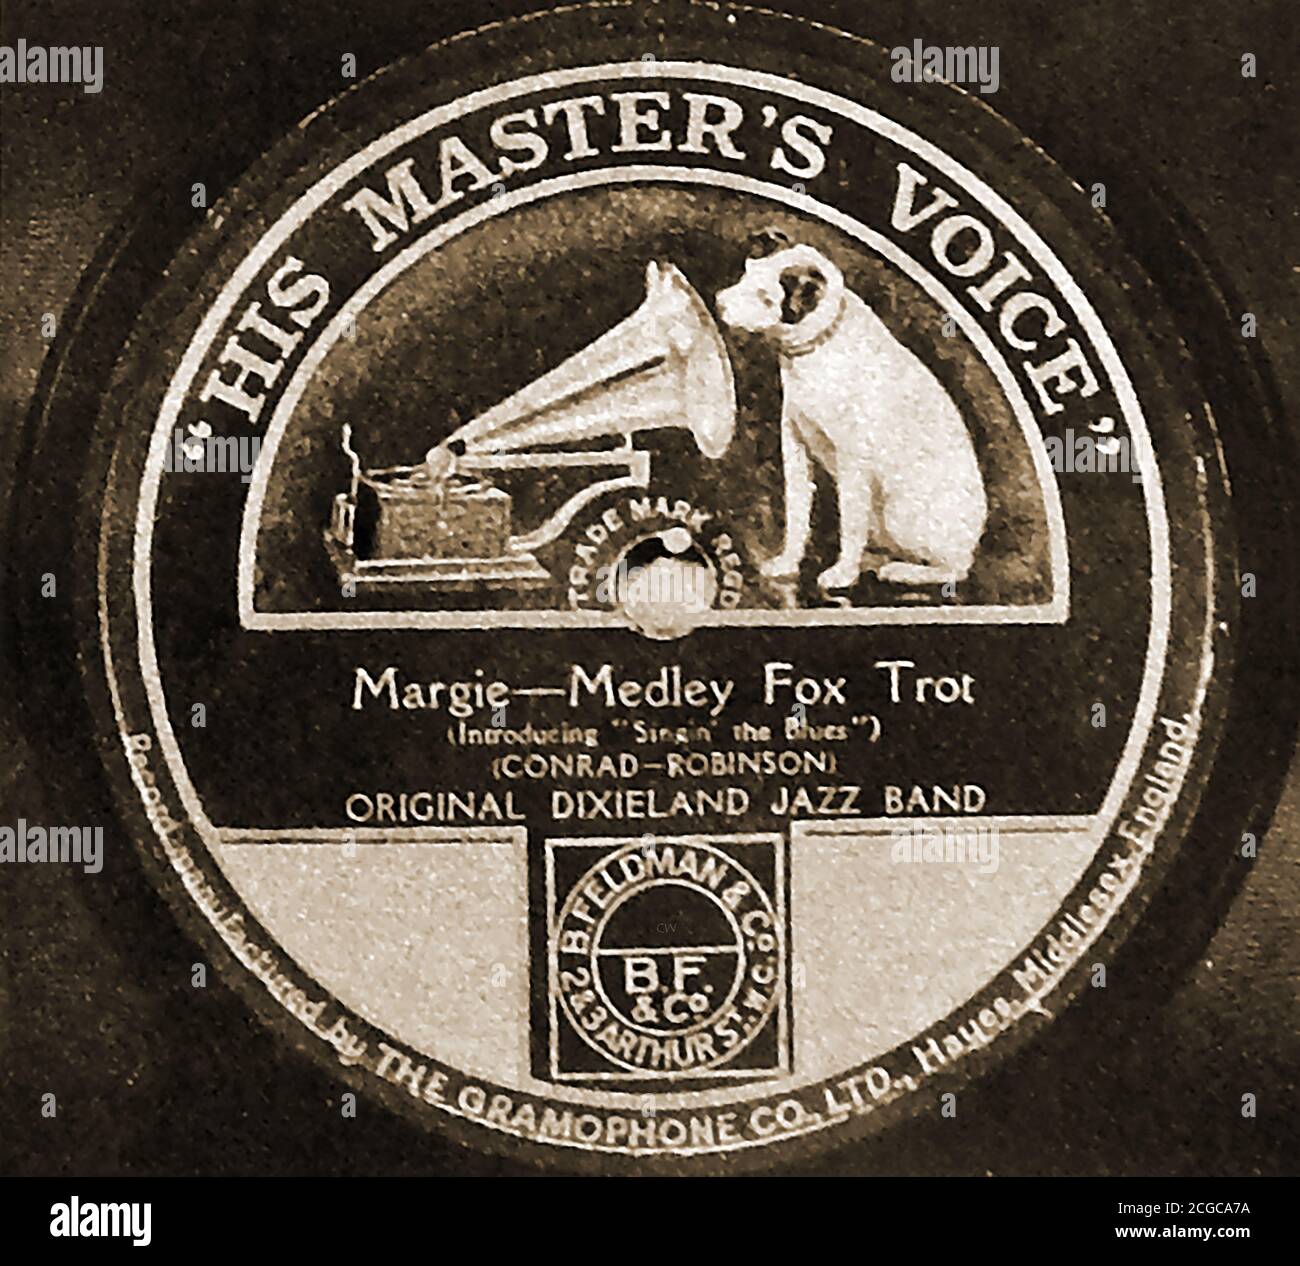 1922 - His Master's Voice record label featuring the Original 